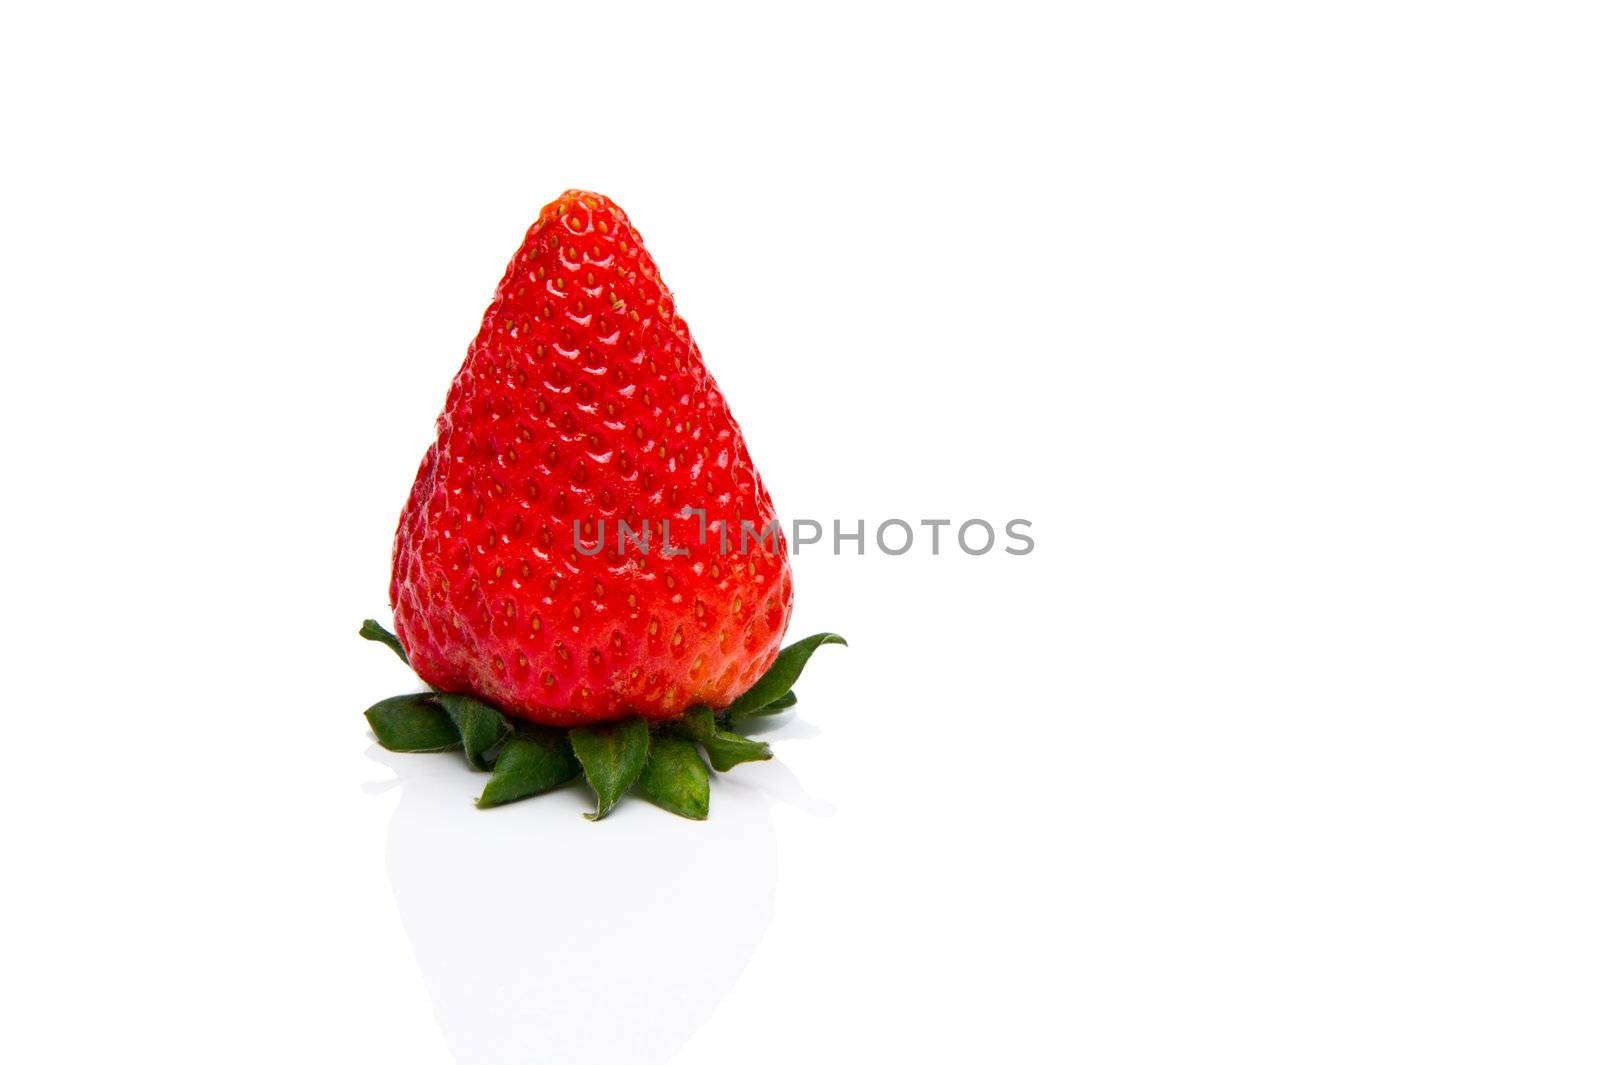 Strawberry by MOELLERTHOMSEN